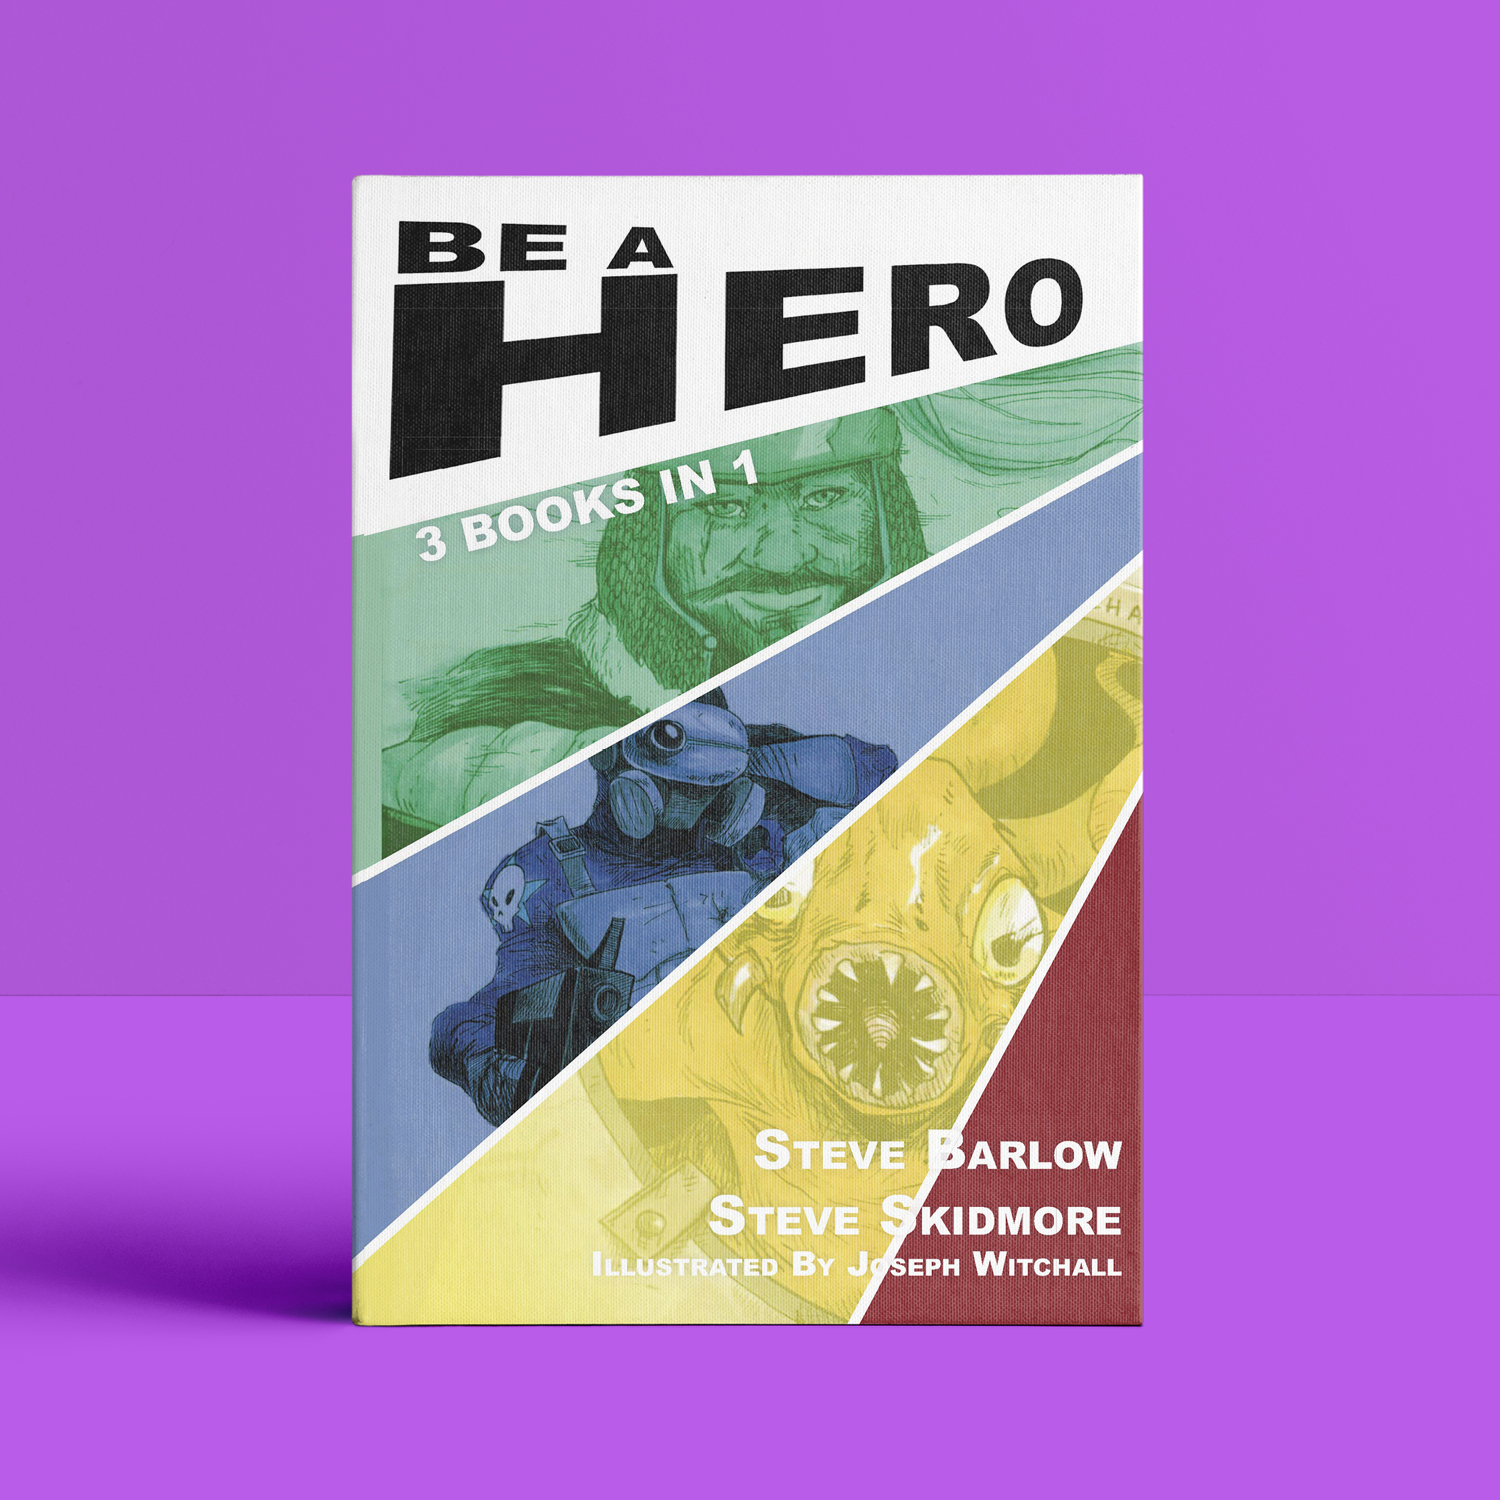 Steve Skidmore and Steve Barlow – Be a hero by 